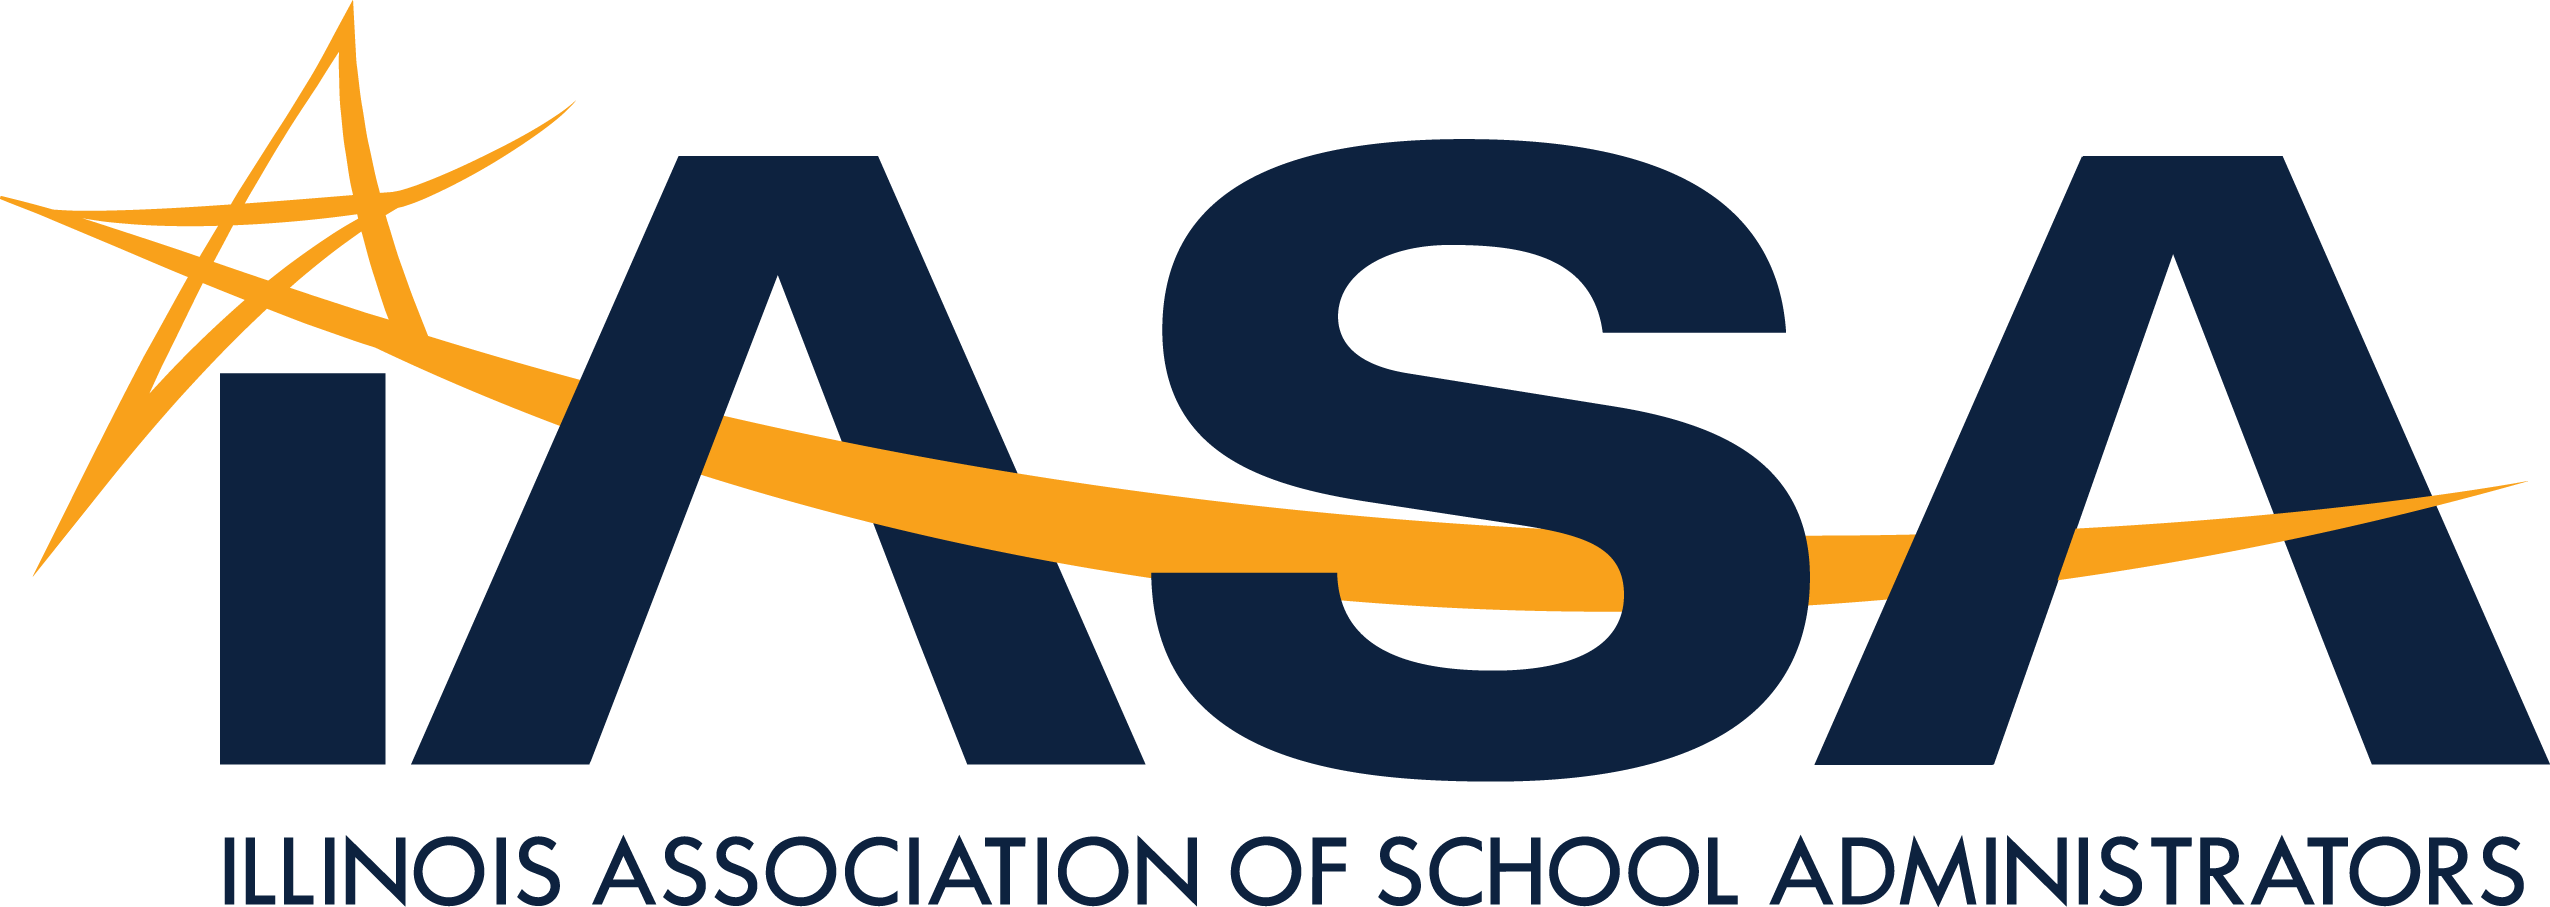 Illinois Association of School Administrators (IASA)